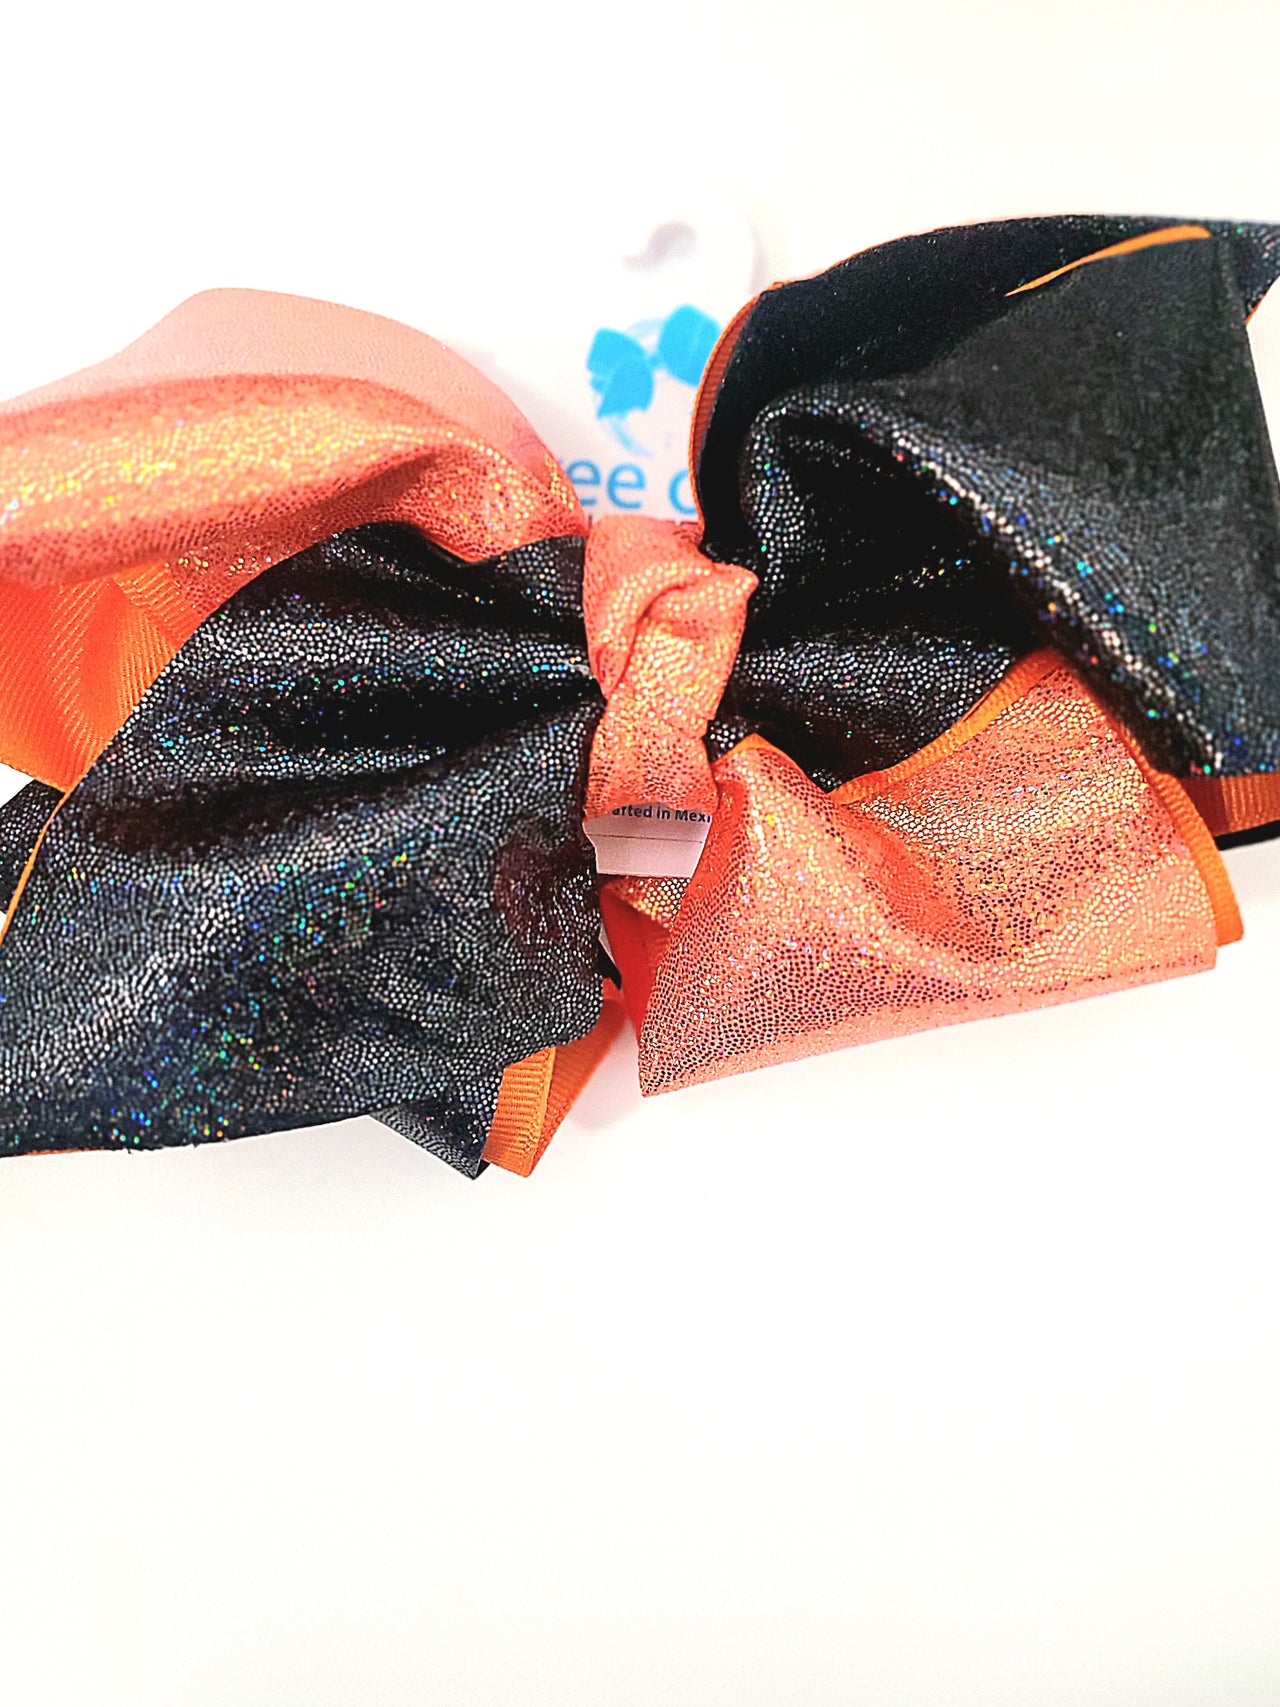 King Sparkle Two Tone Orange and Black Glitter Hair Bow